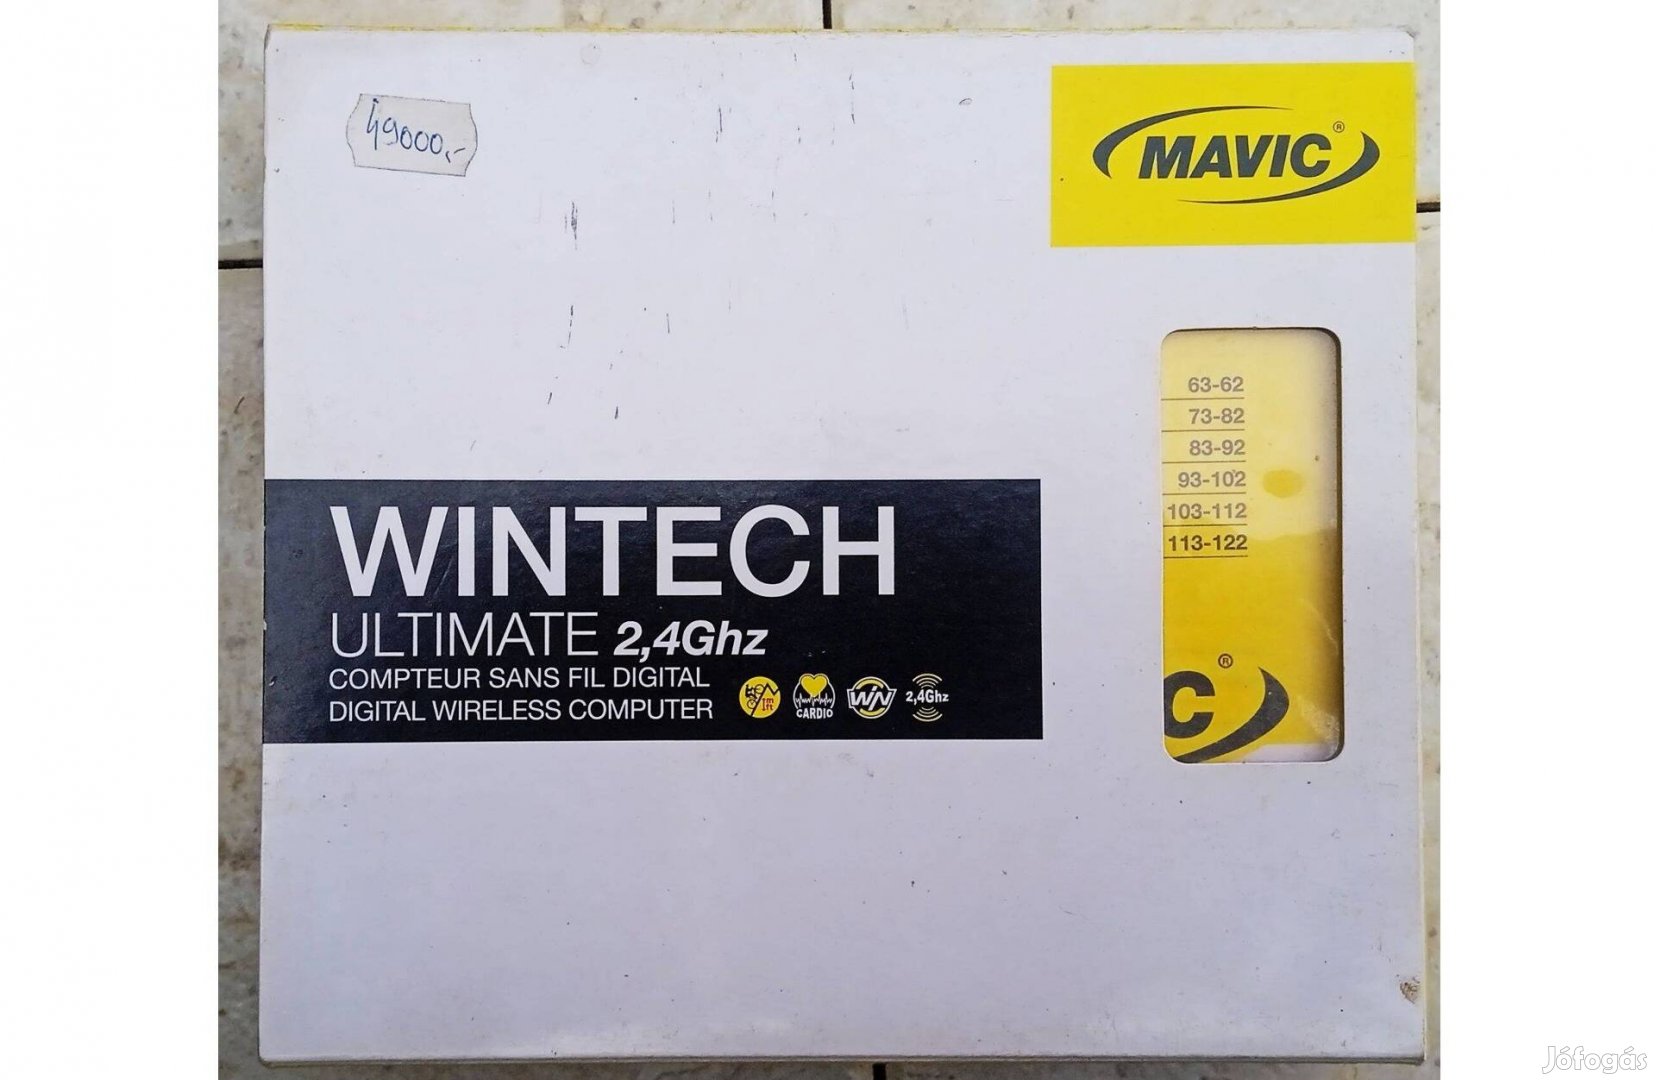 Mavic Wintech Ultimate 2,4 Ghz wireless digital computer